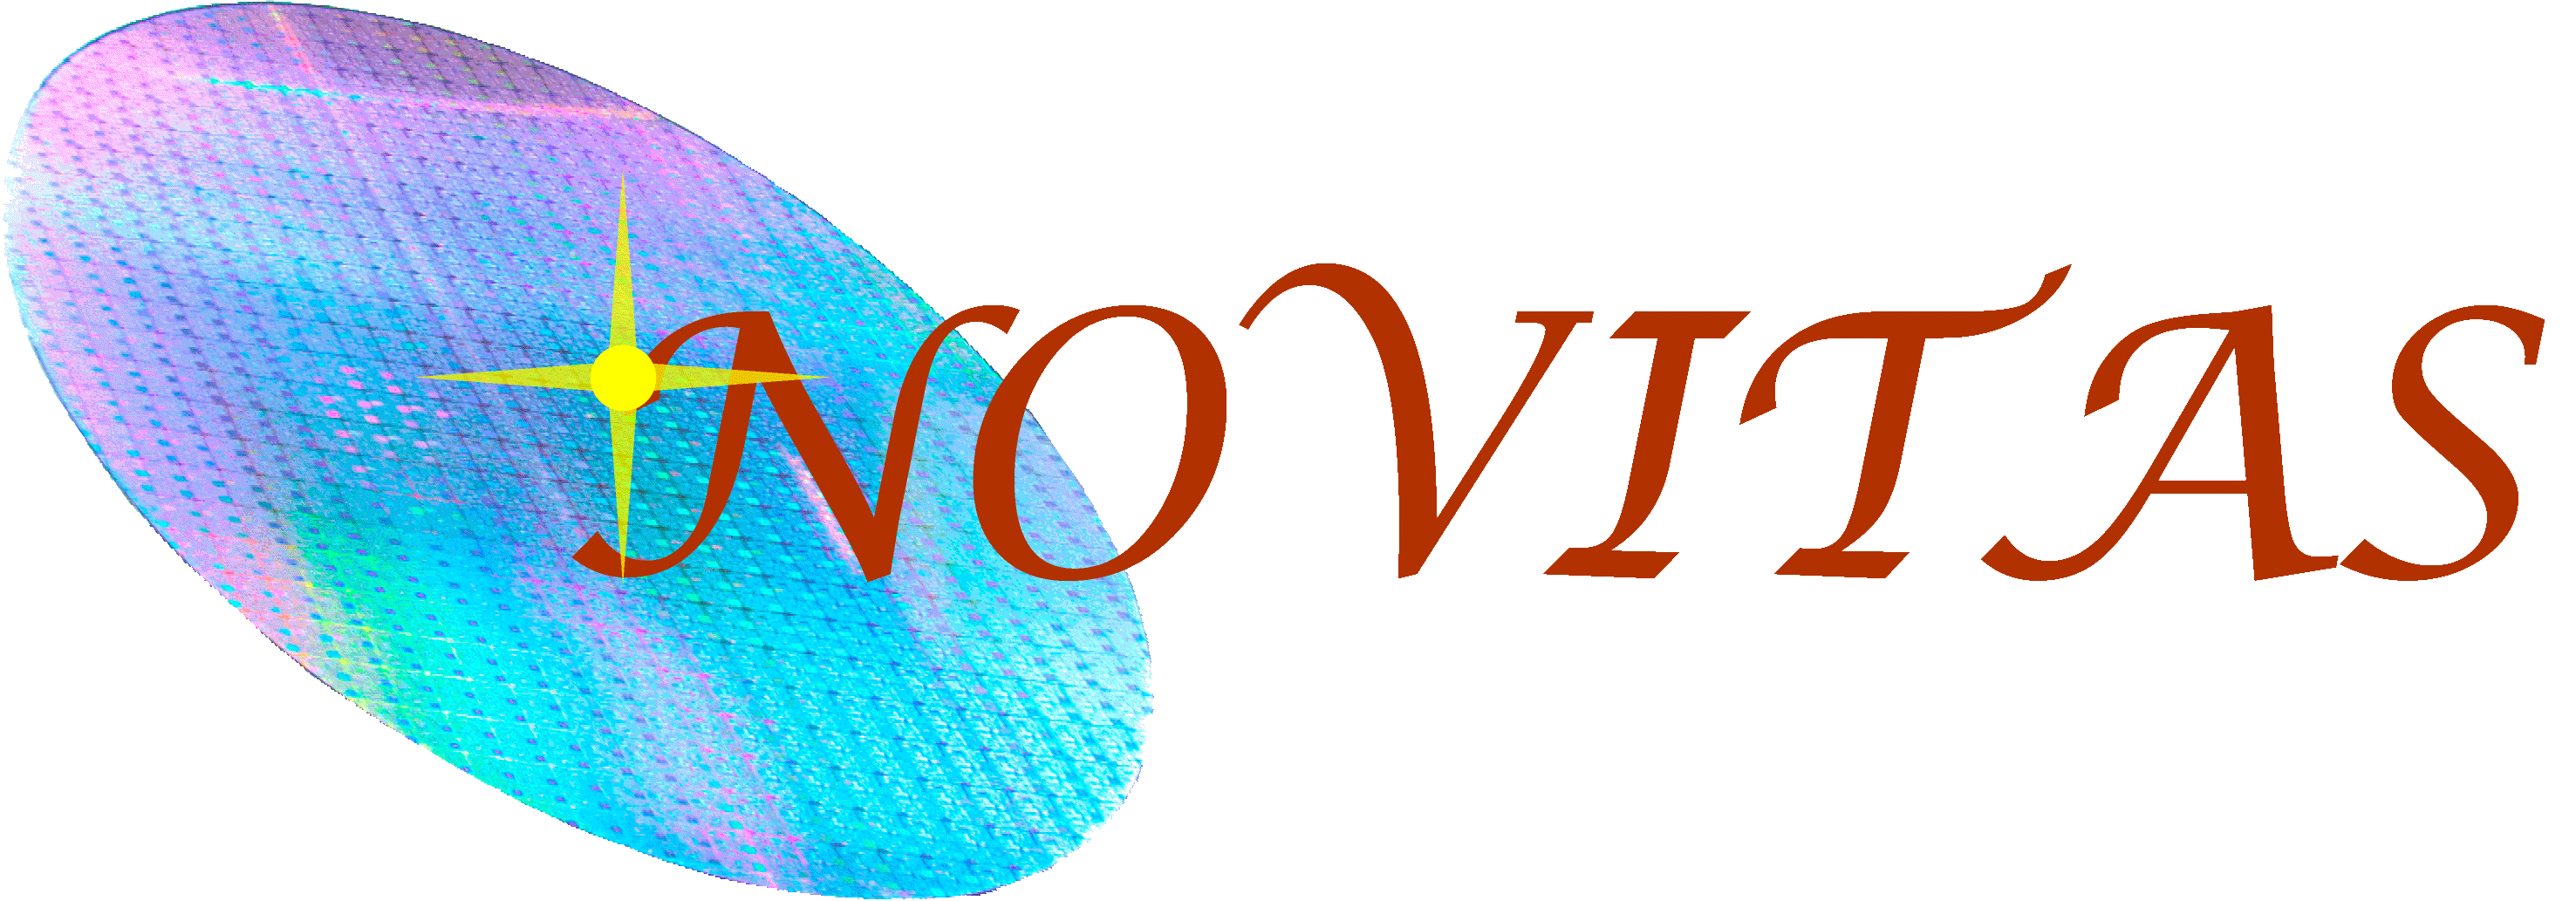 NOVITAS - Nanoelectronics Centre of Excellence